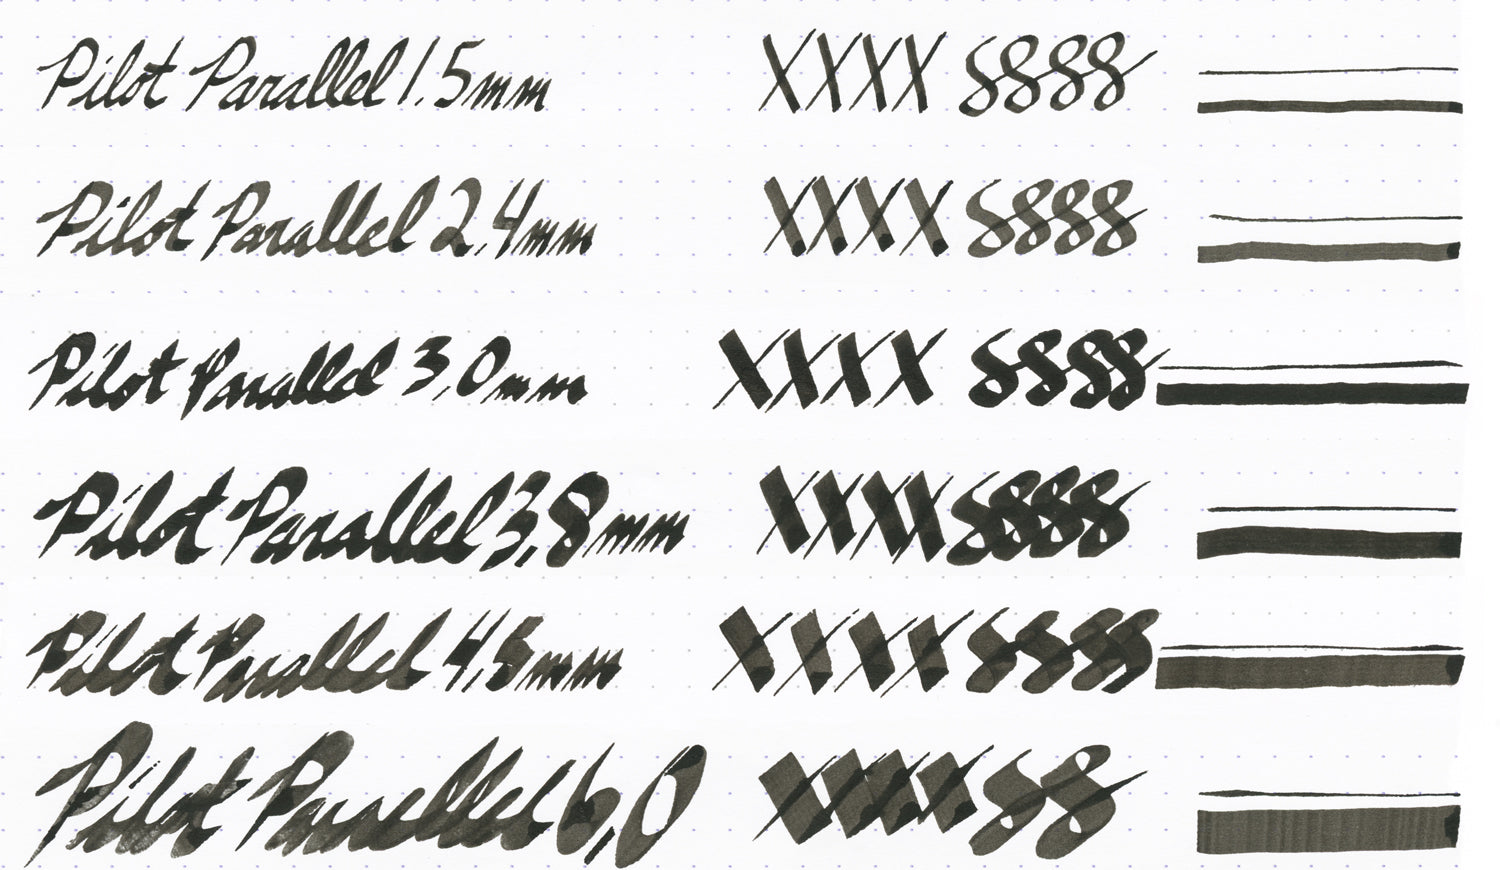 Pilot Parallel Calligraphy Pen Set - 4.5 mm Pen Nib with Ink Cartridges -  Sam Flax Atlanta